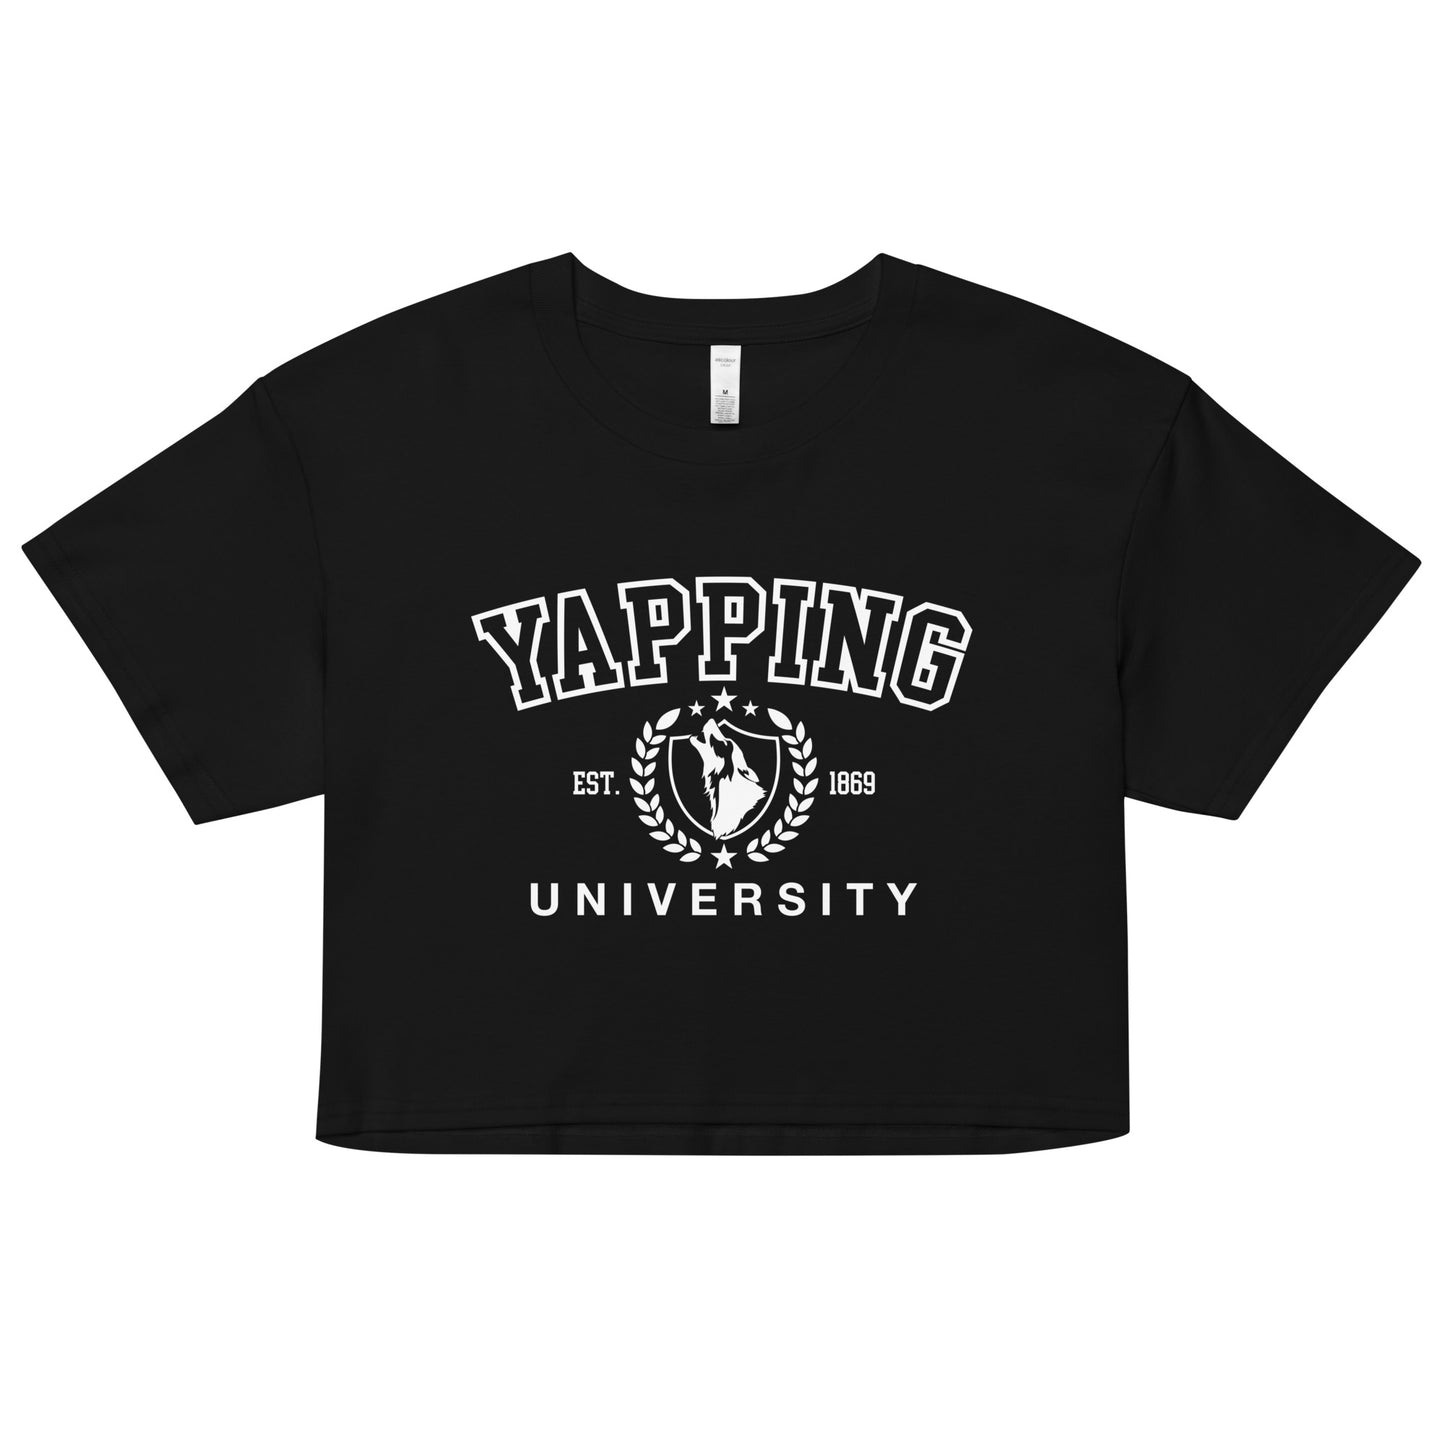 Yapping University crop top